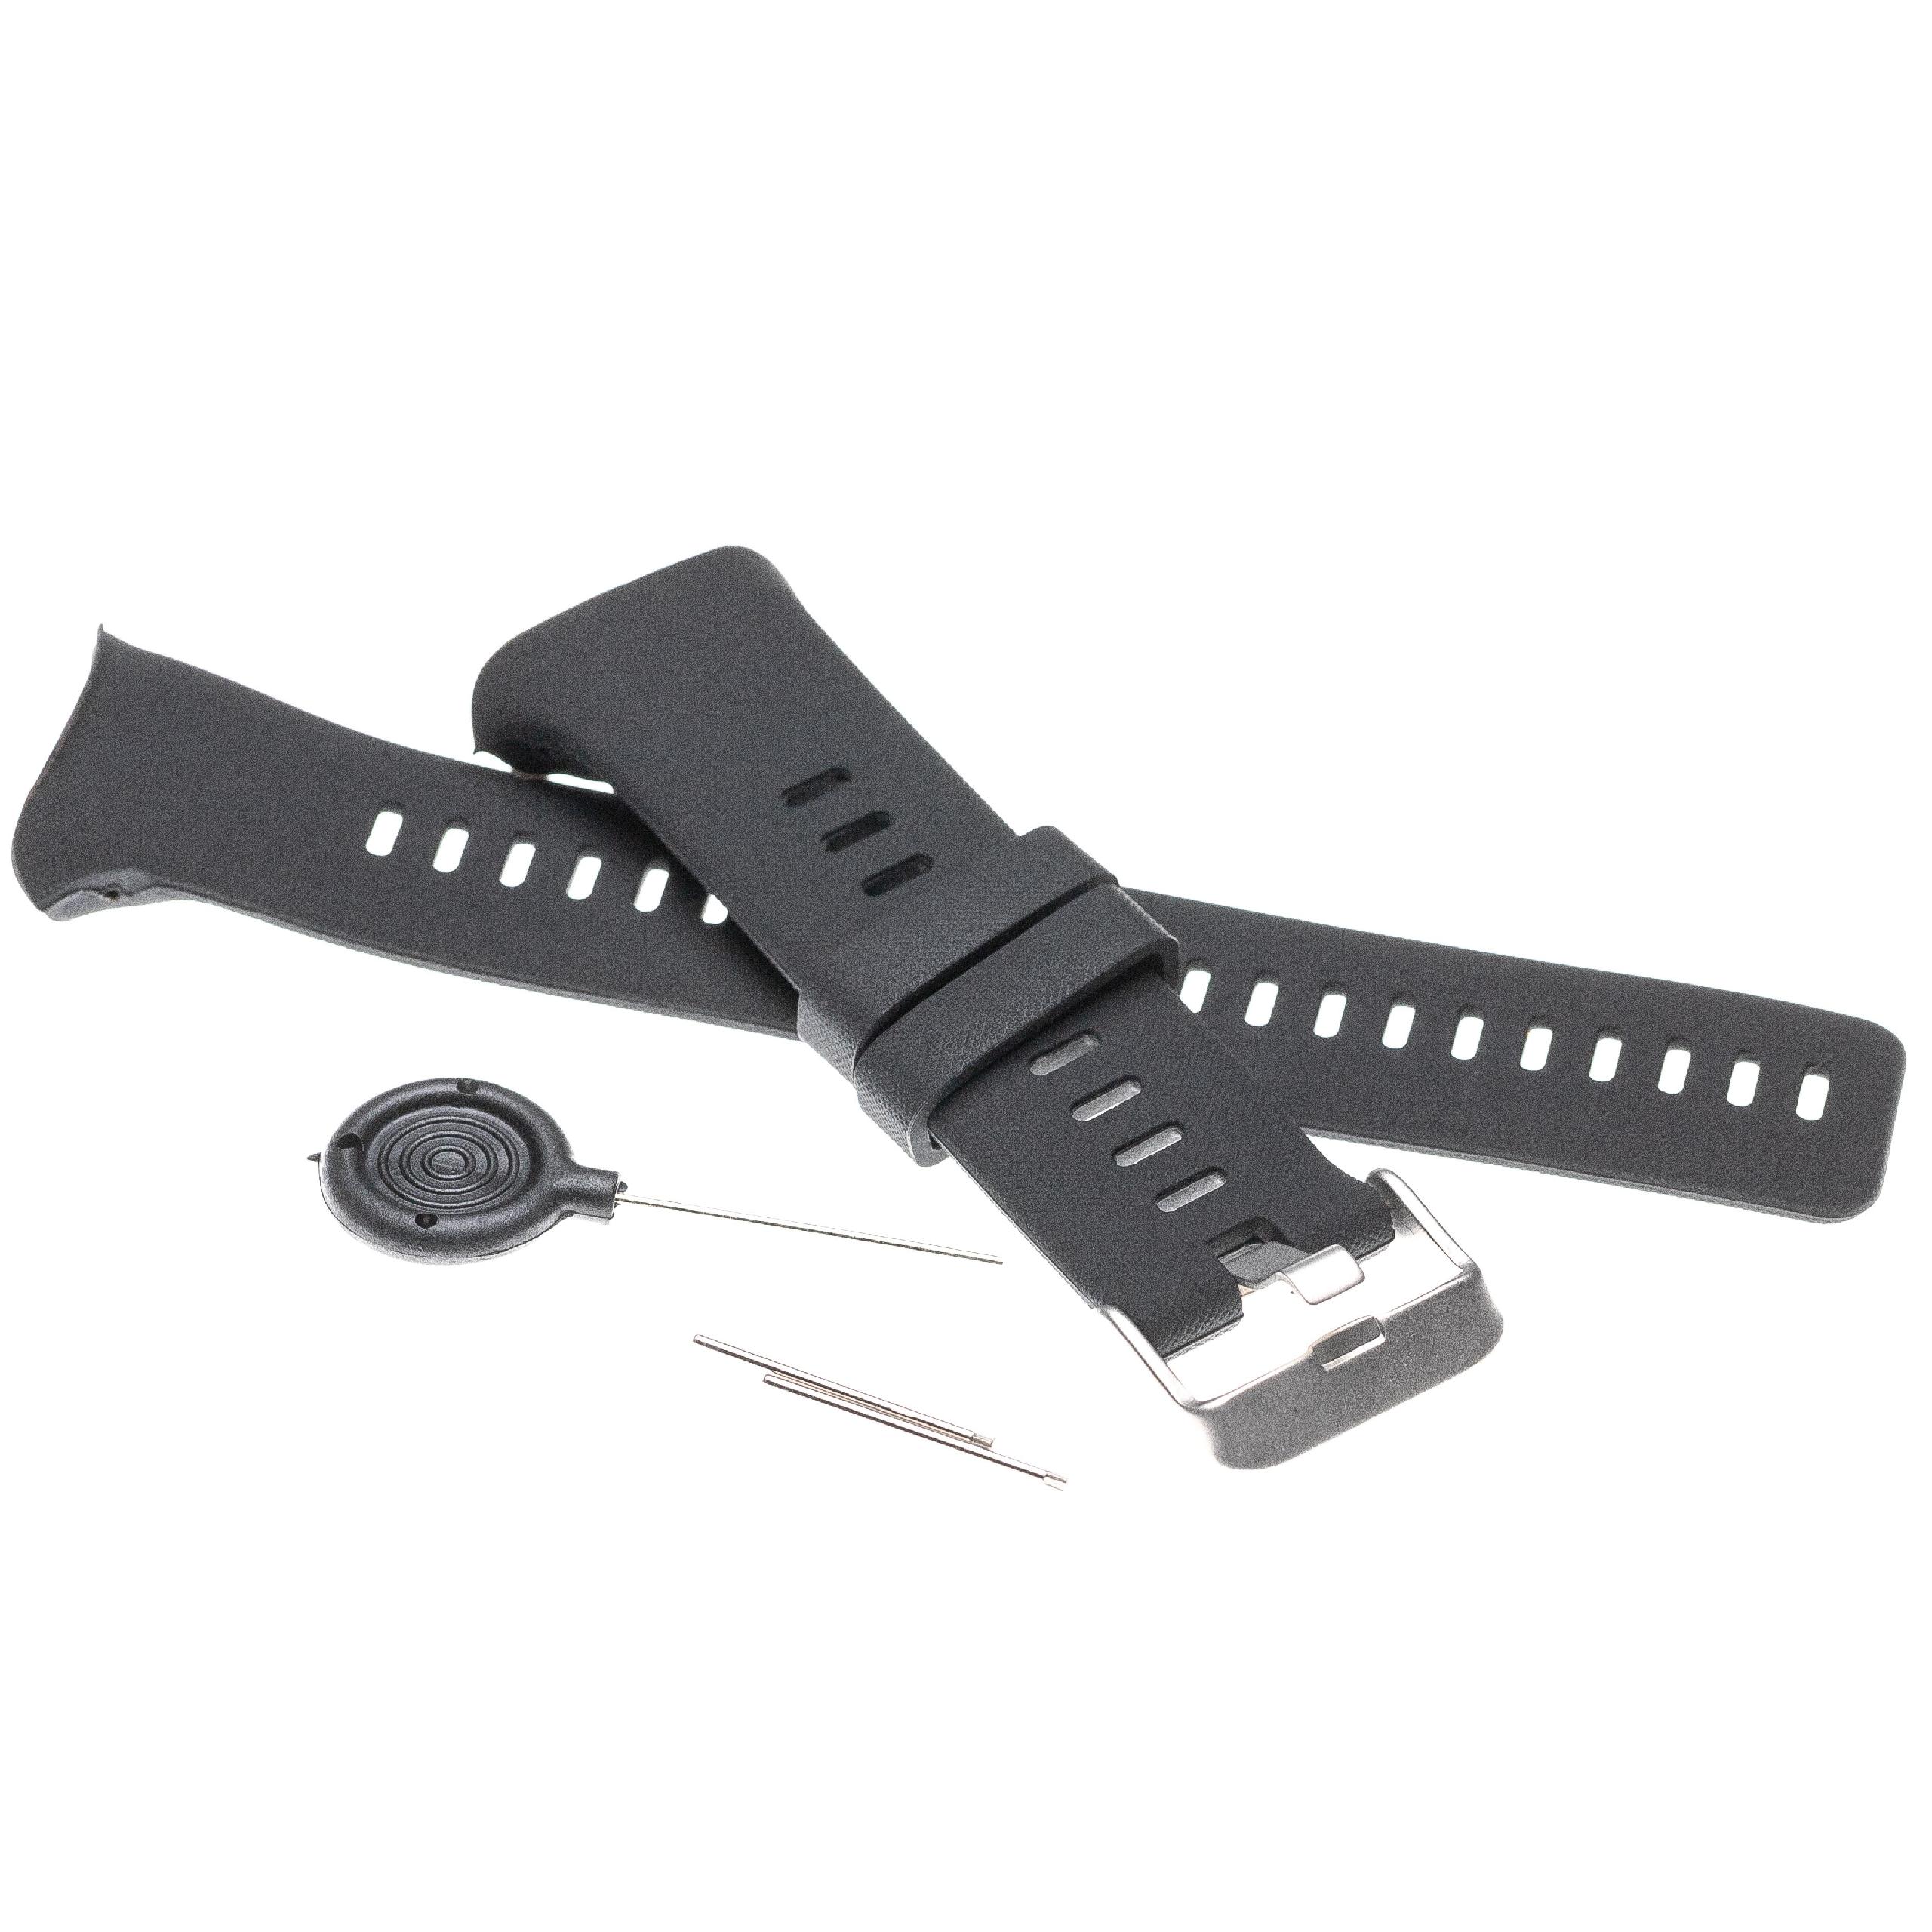 wristband for Polar Vantage Smartwatch - 12.6 + 8.7 cm long, black